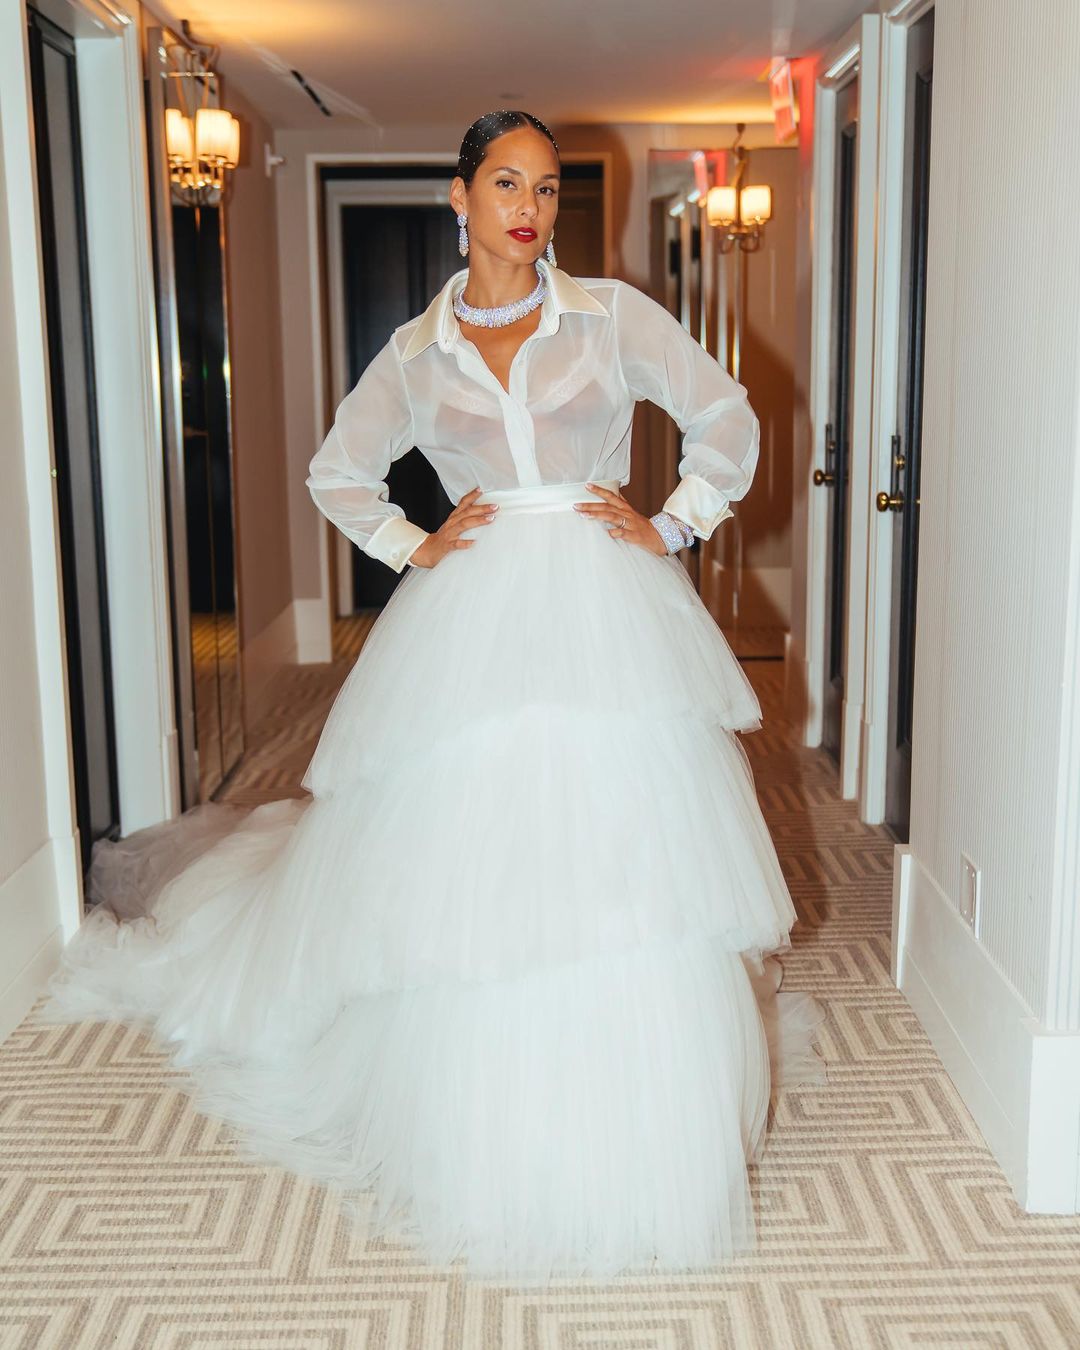  Alicia Keys- Keeping It White And Gorgeous